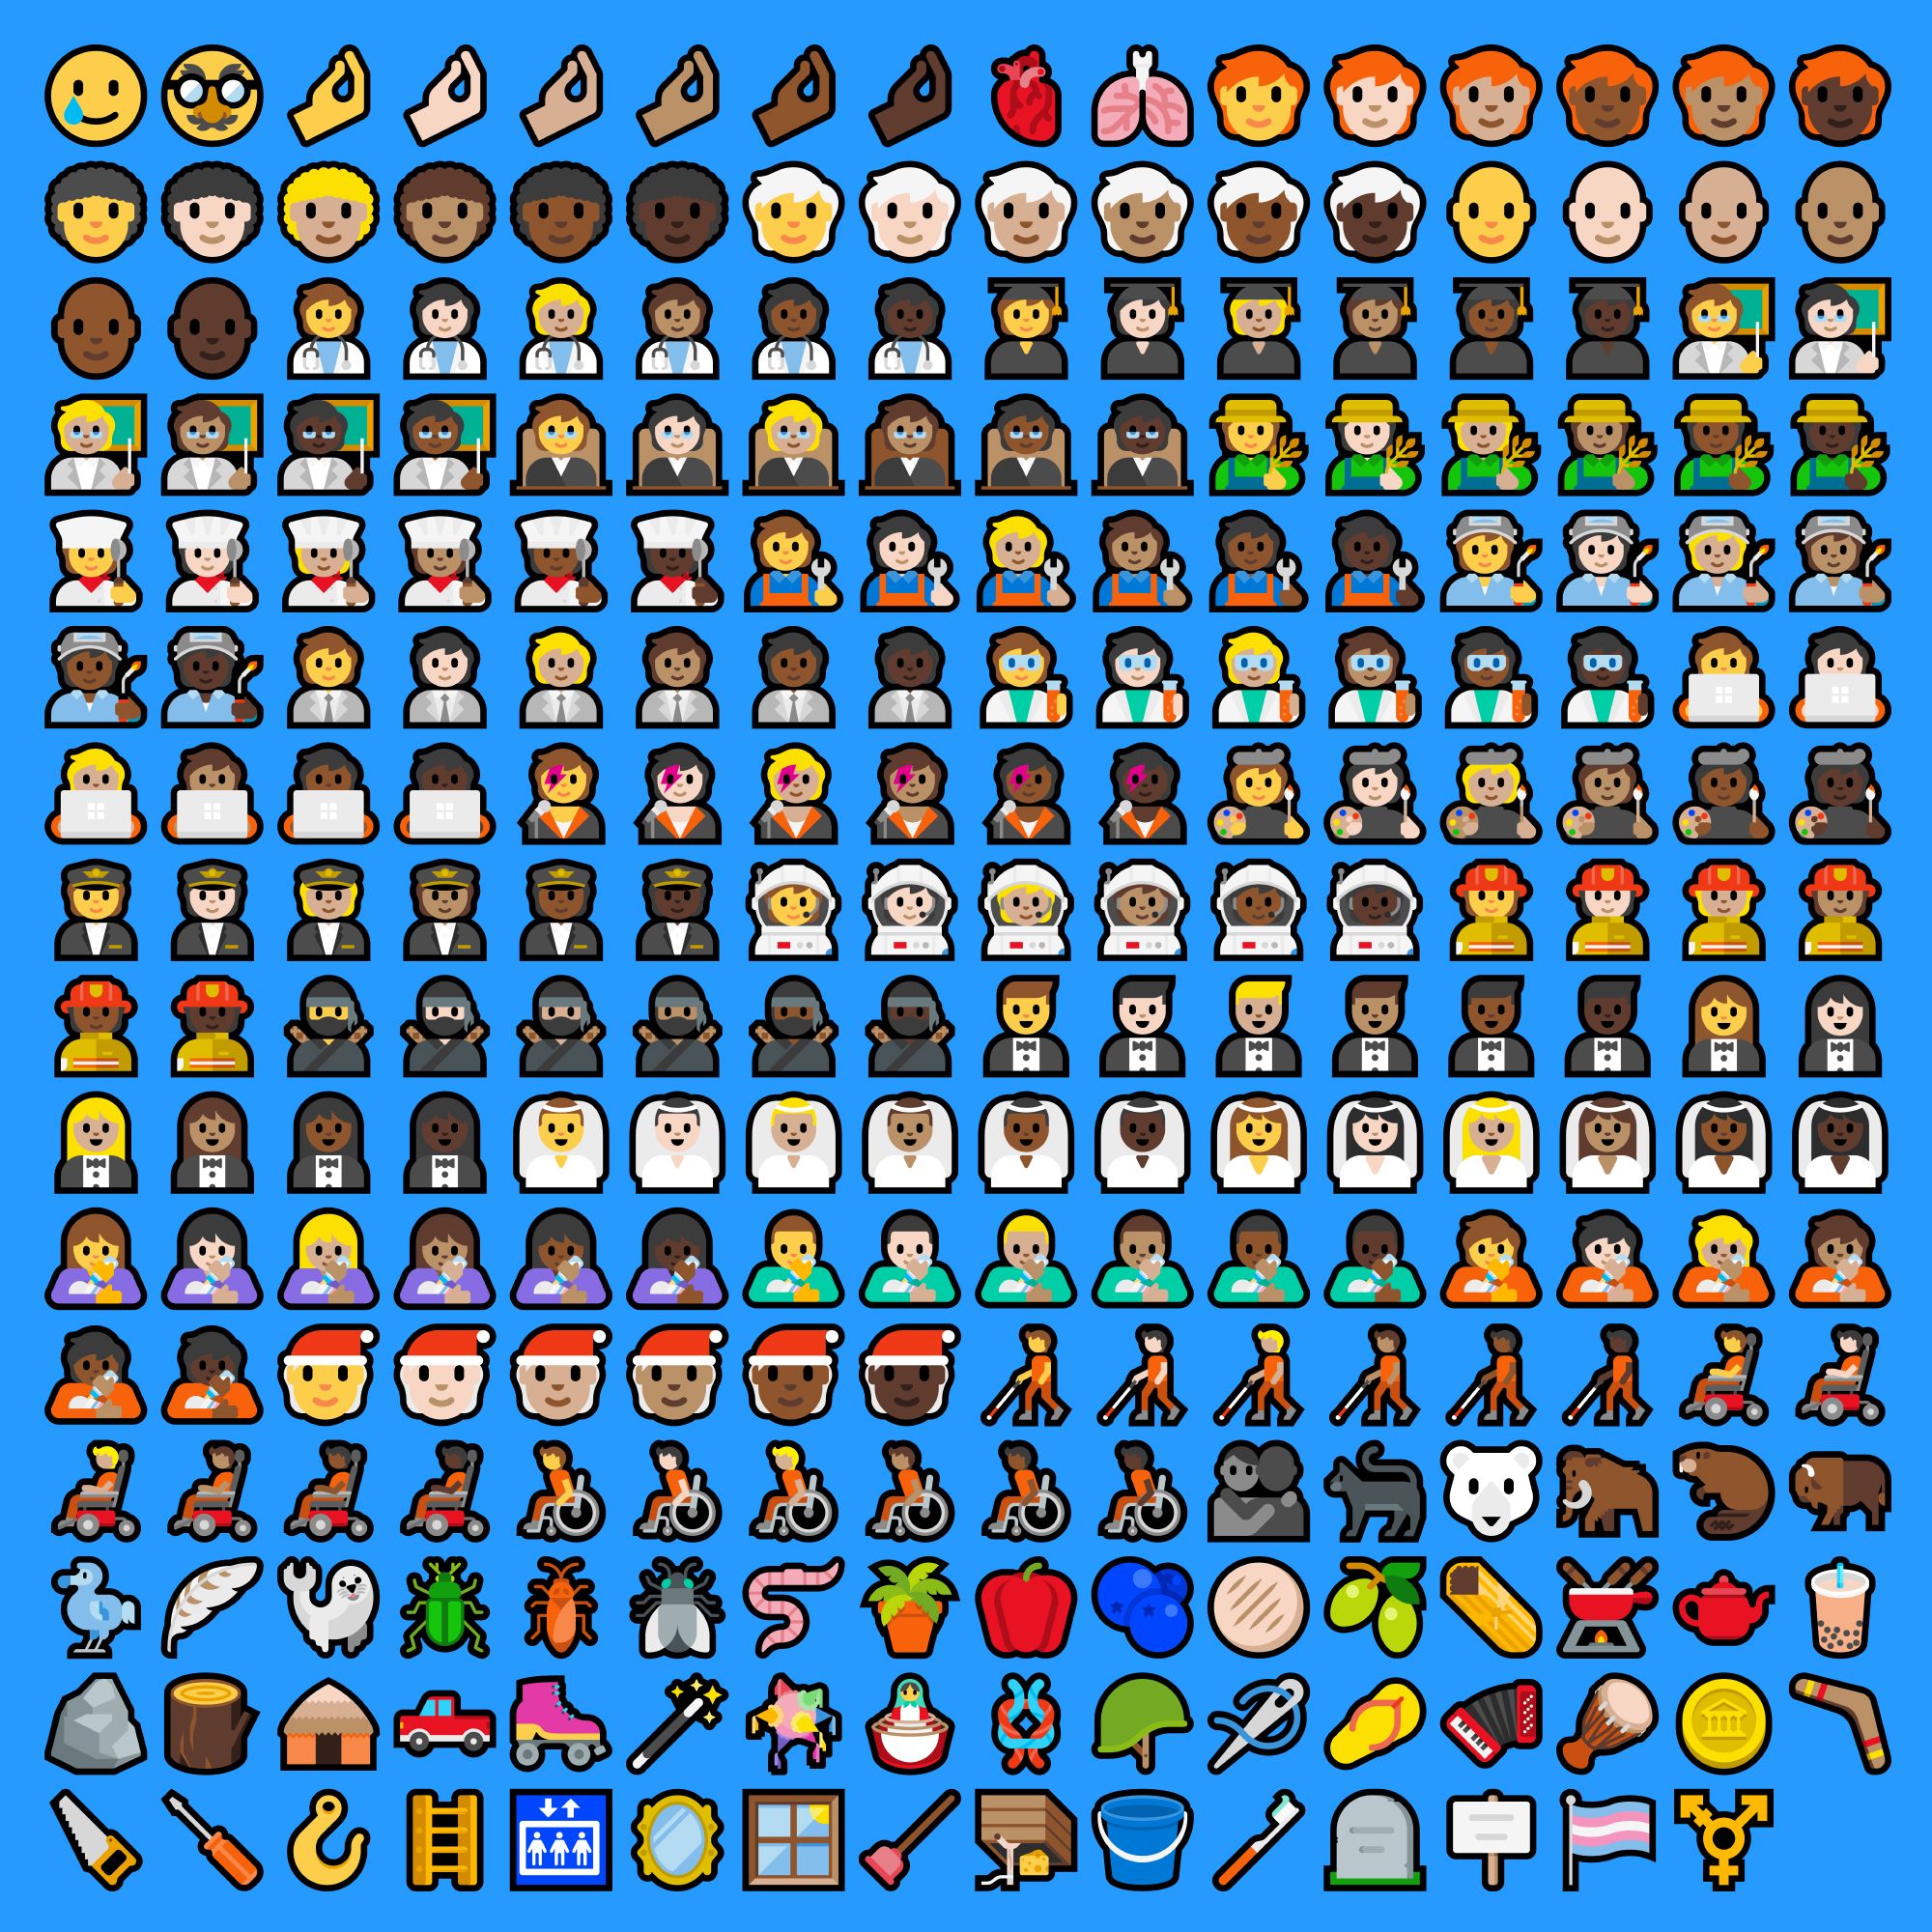 Emojipedia-Windows-11-October-Update-All-New-Emojis-1